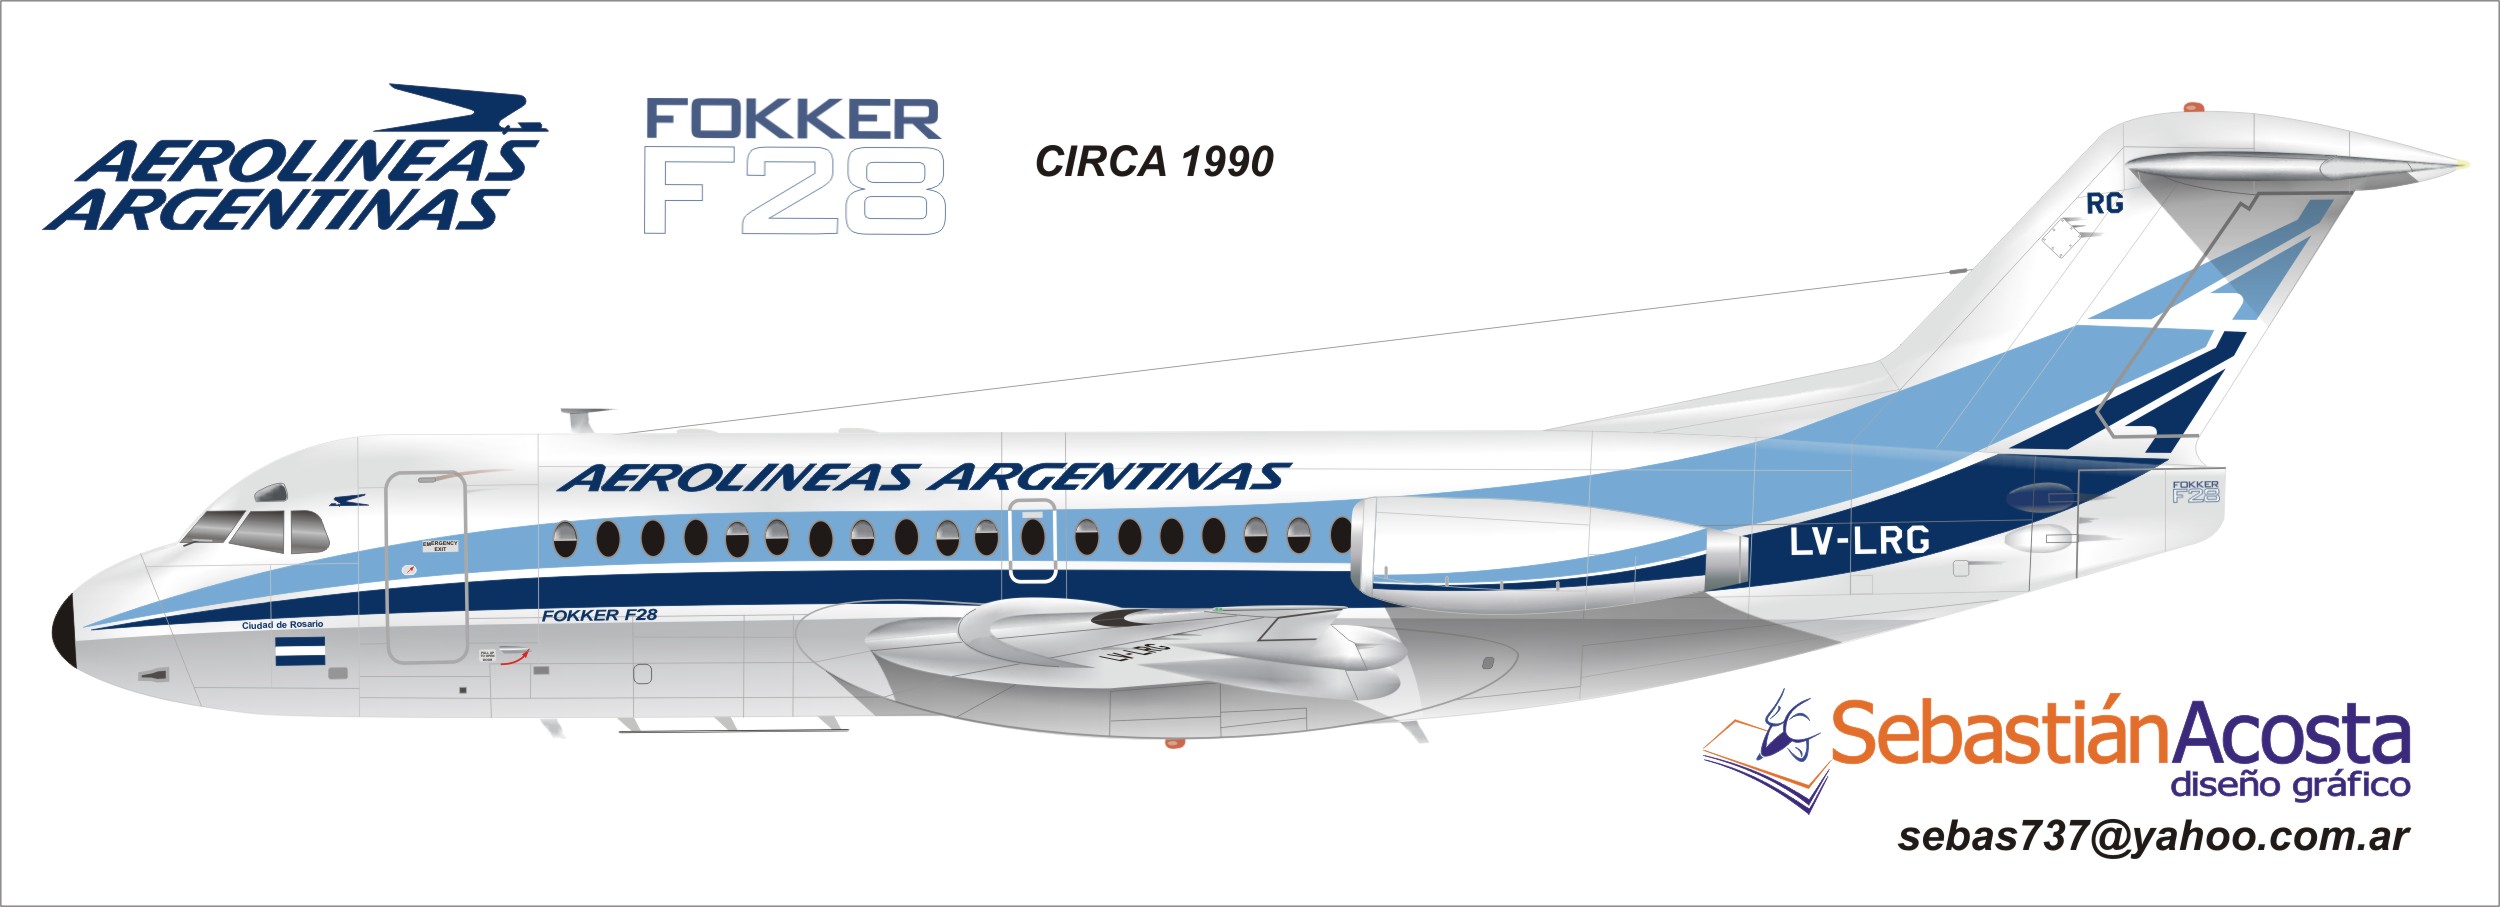 Fokker F-28 Fellowship next